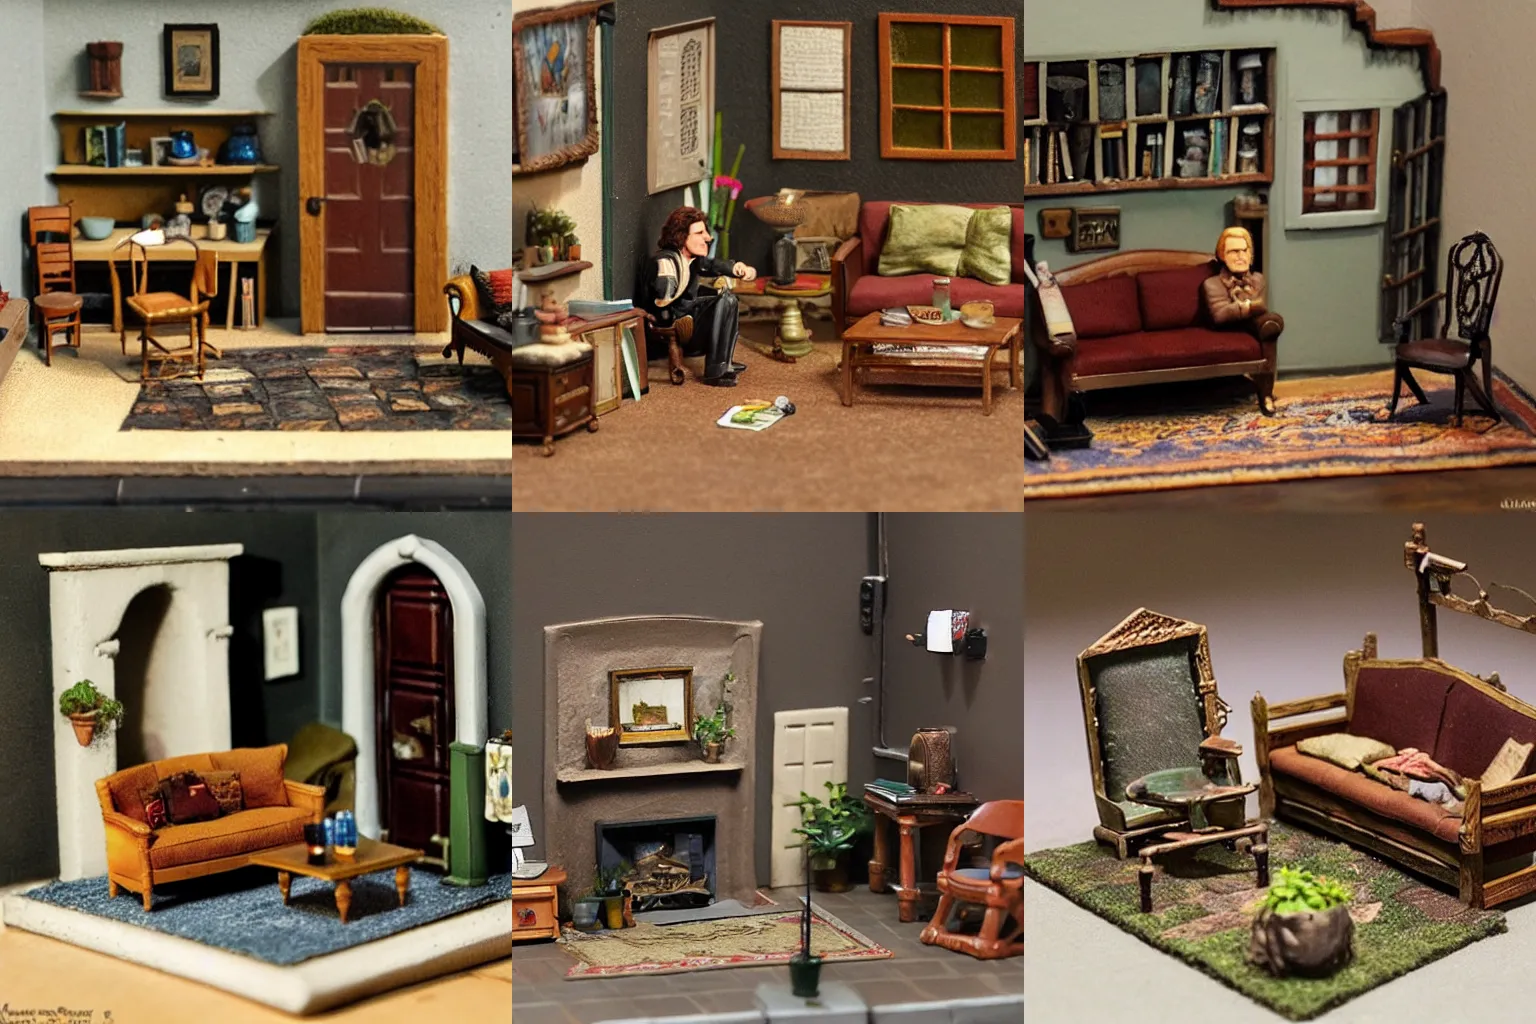 Prompt: miniature diorama of inigo montoya's living room